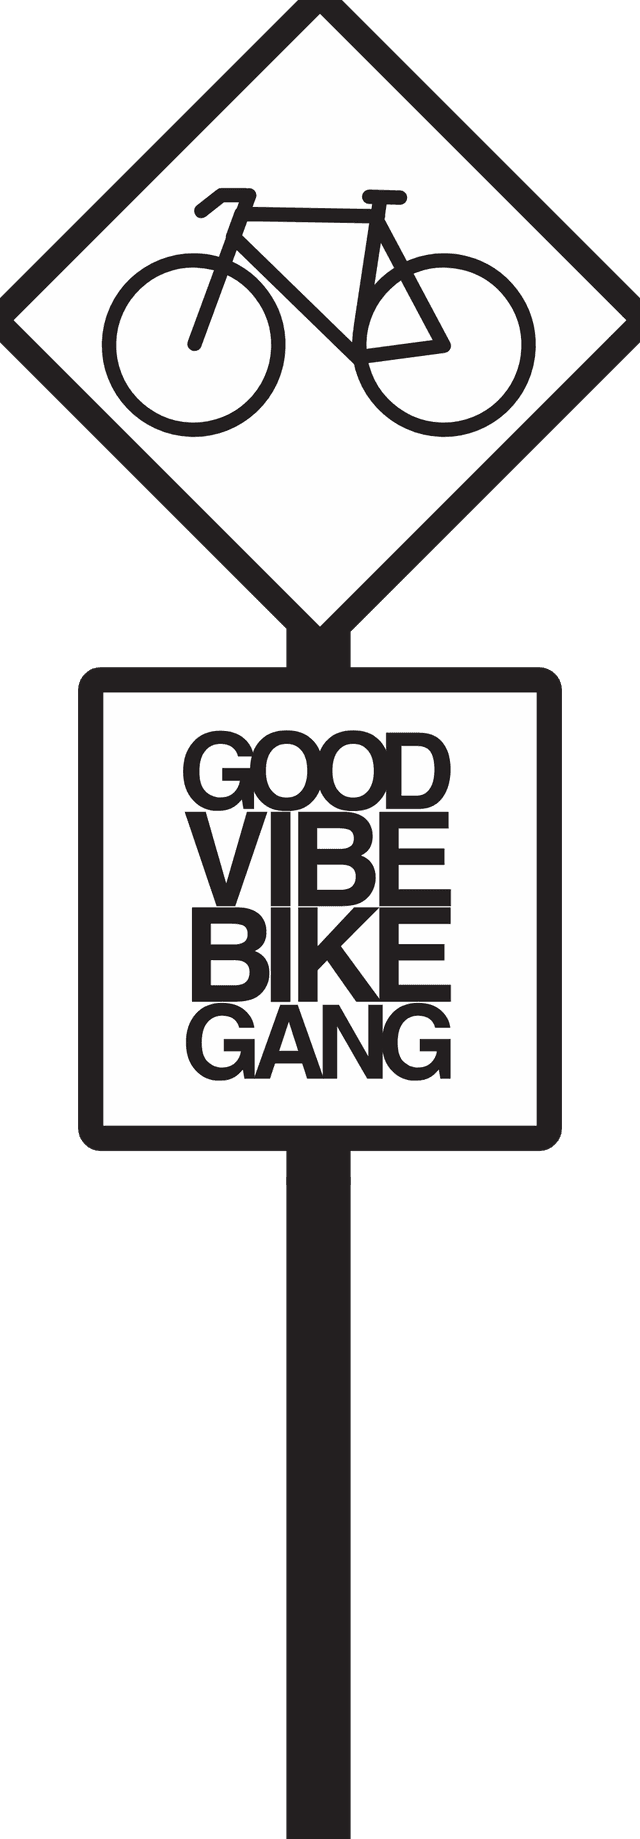 Good Vibe Bike Gang Logo download